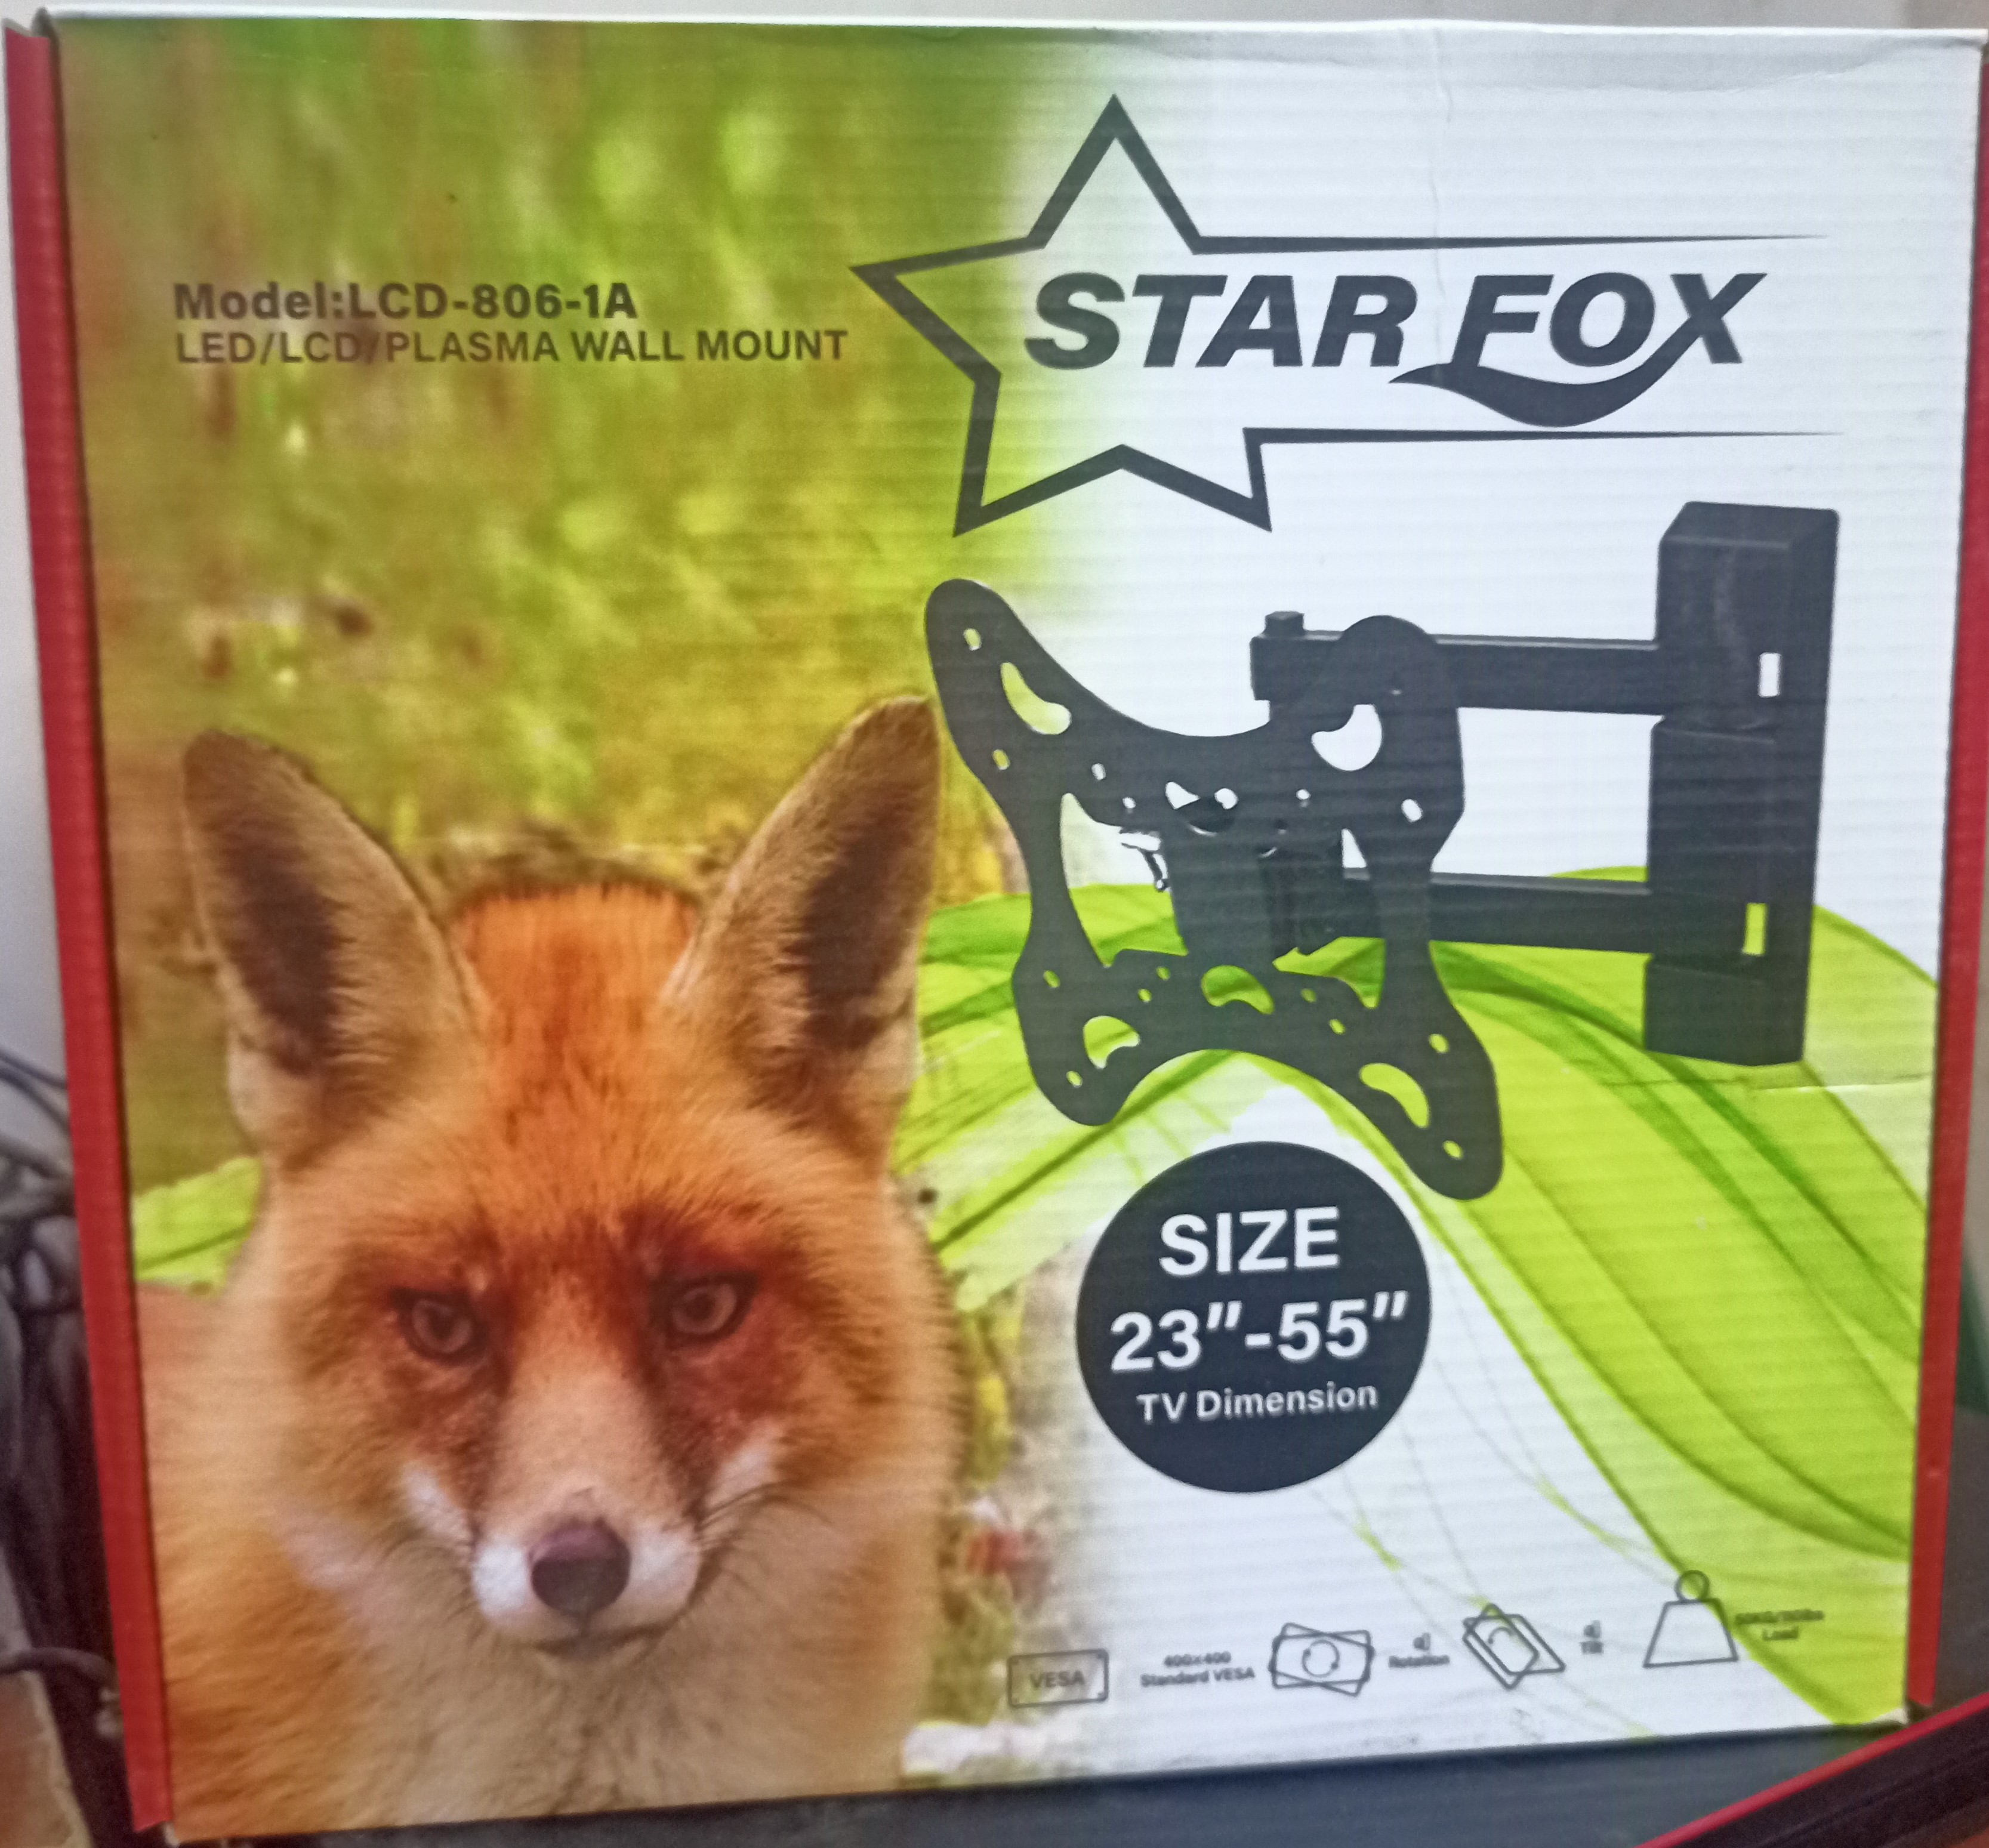 Wall Mount Adjustable Star Fox LCD-806-1A (23-55)